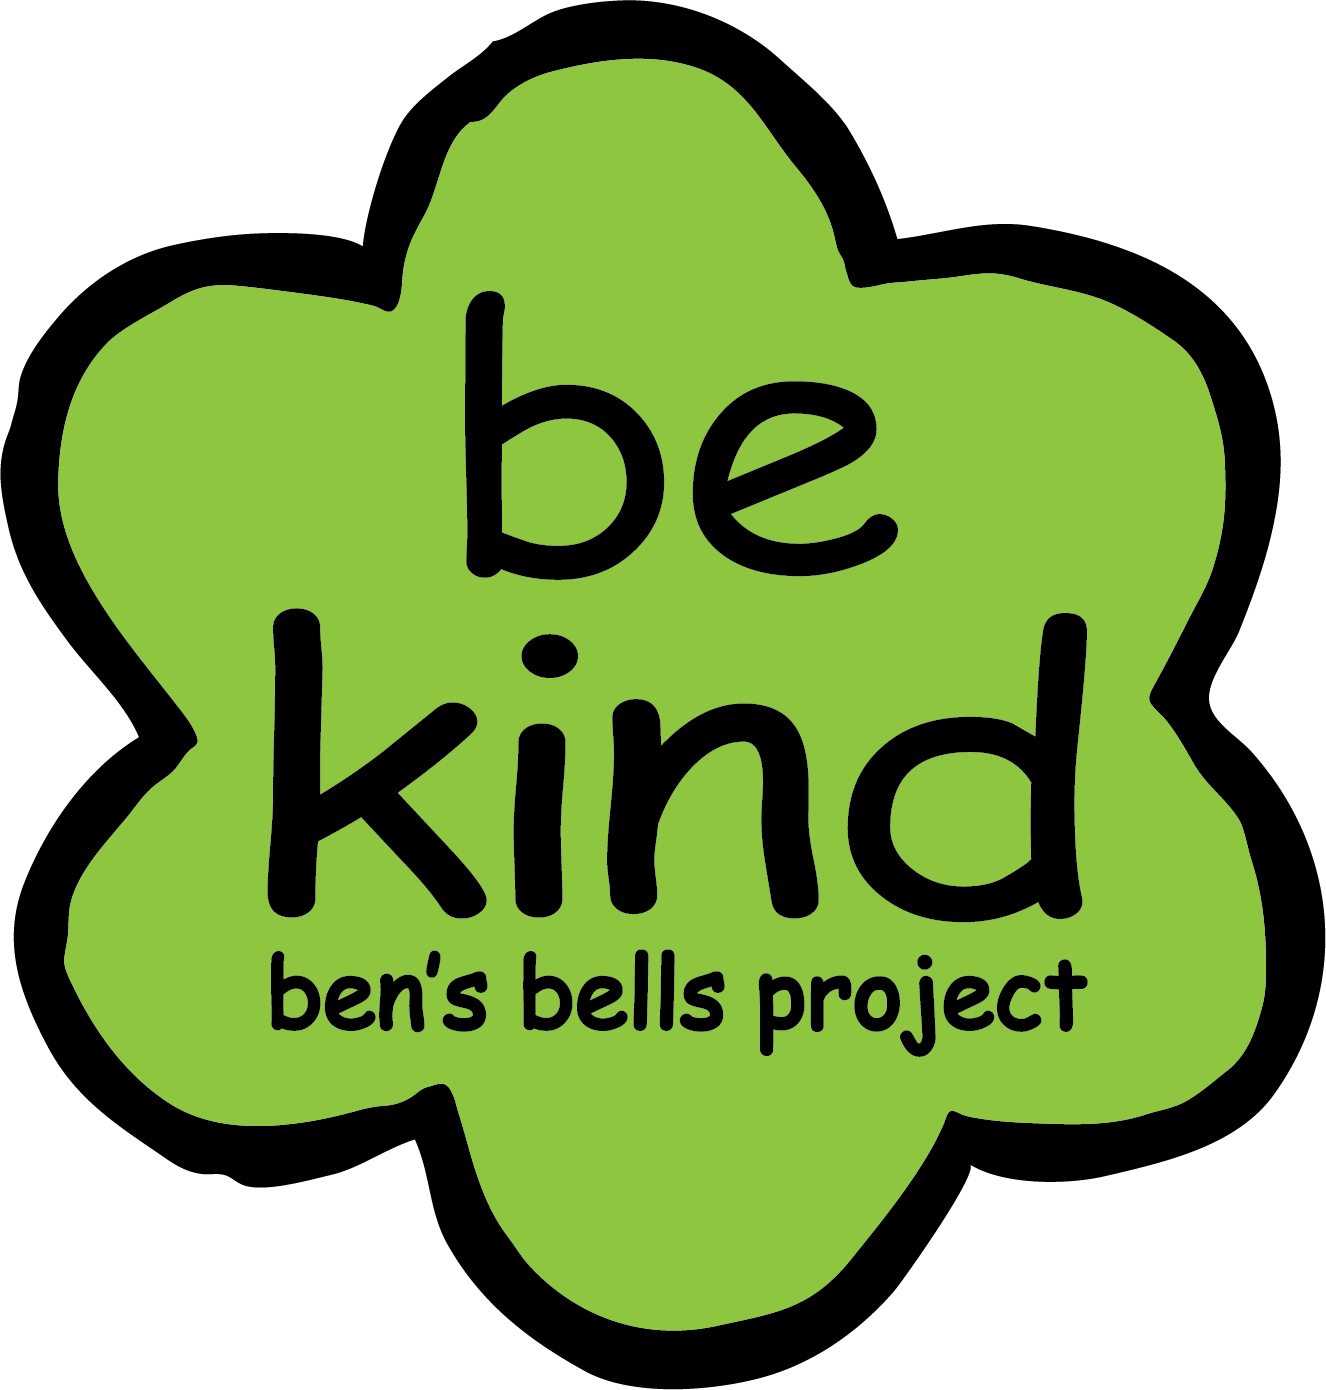 [Ben's Bells Project 'be kind' logo]